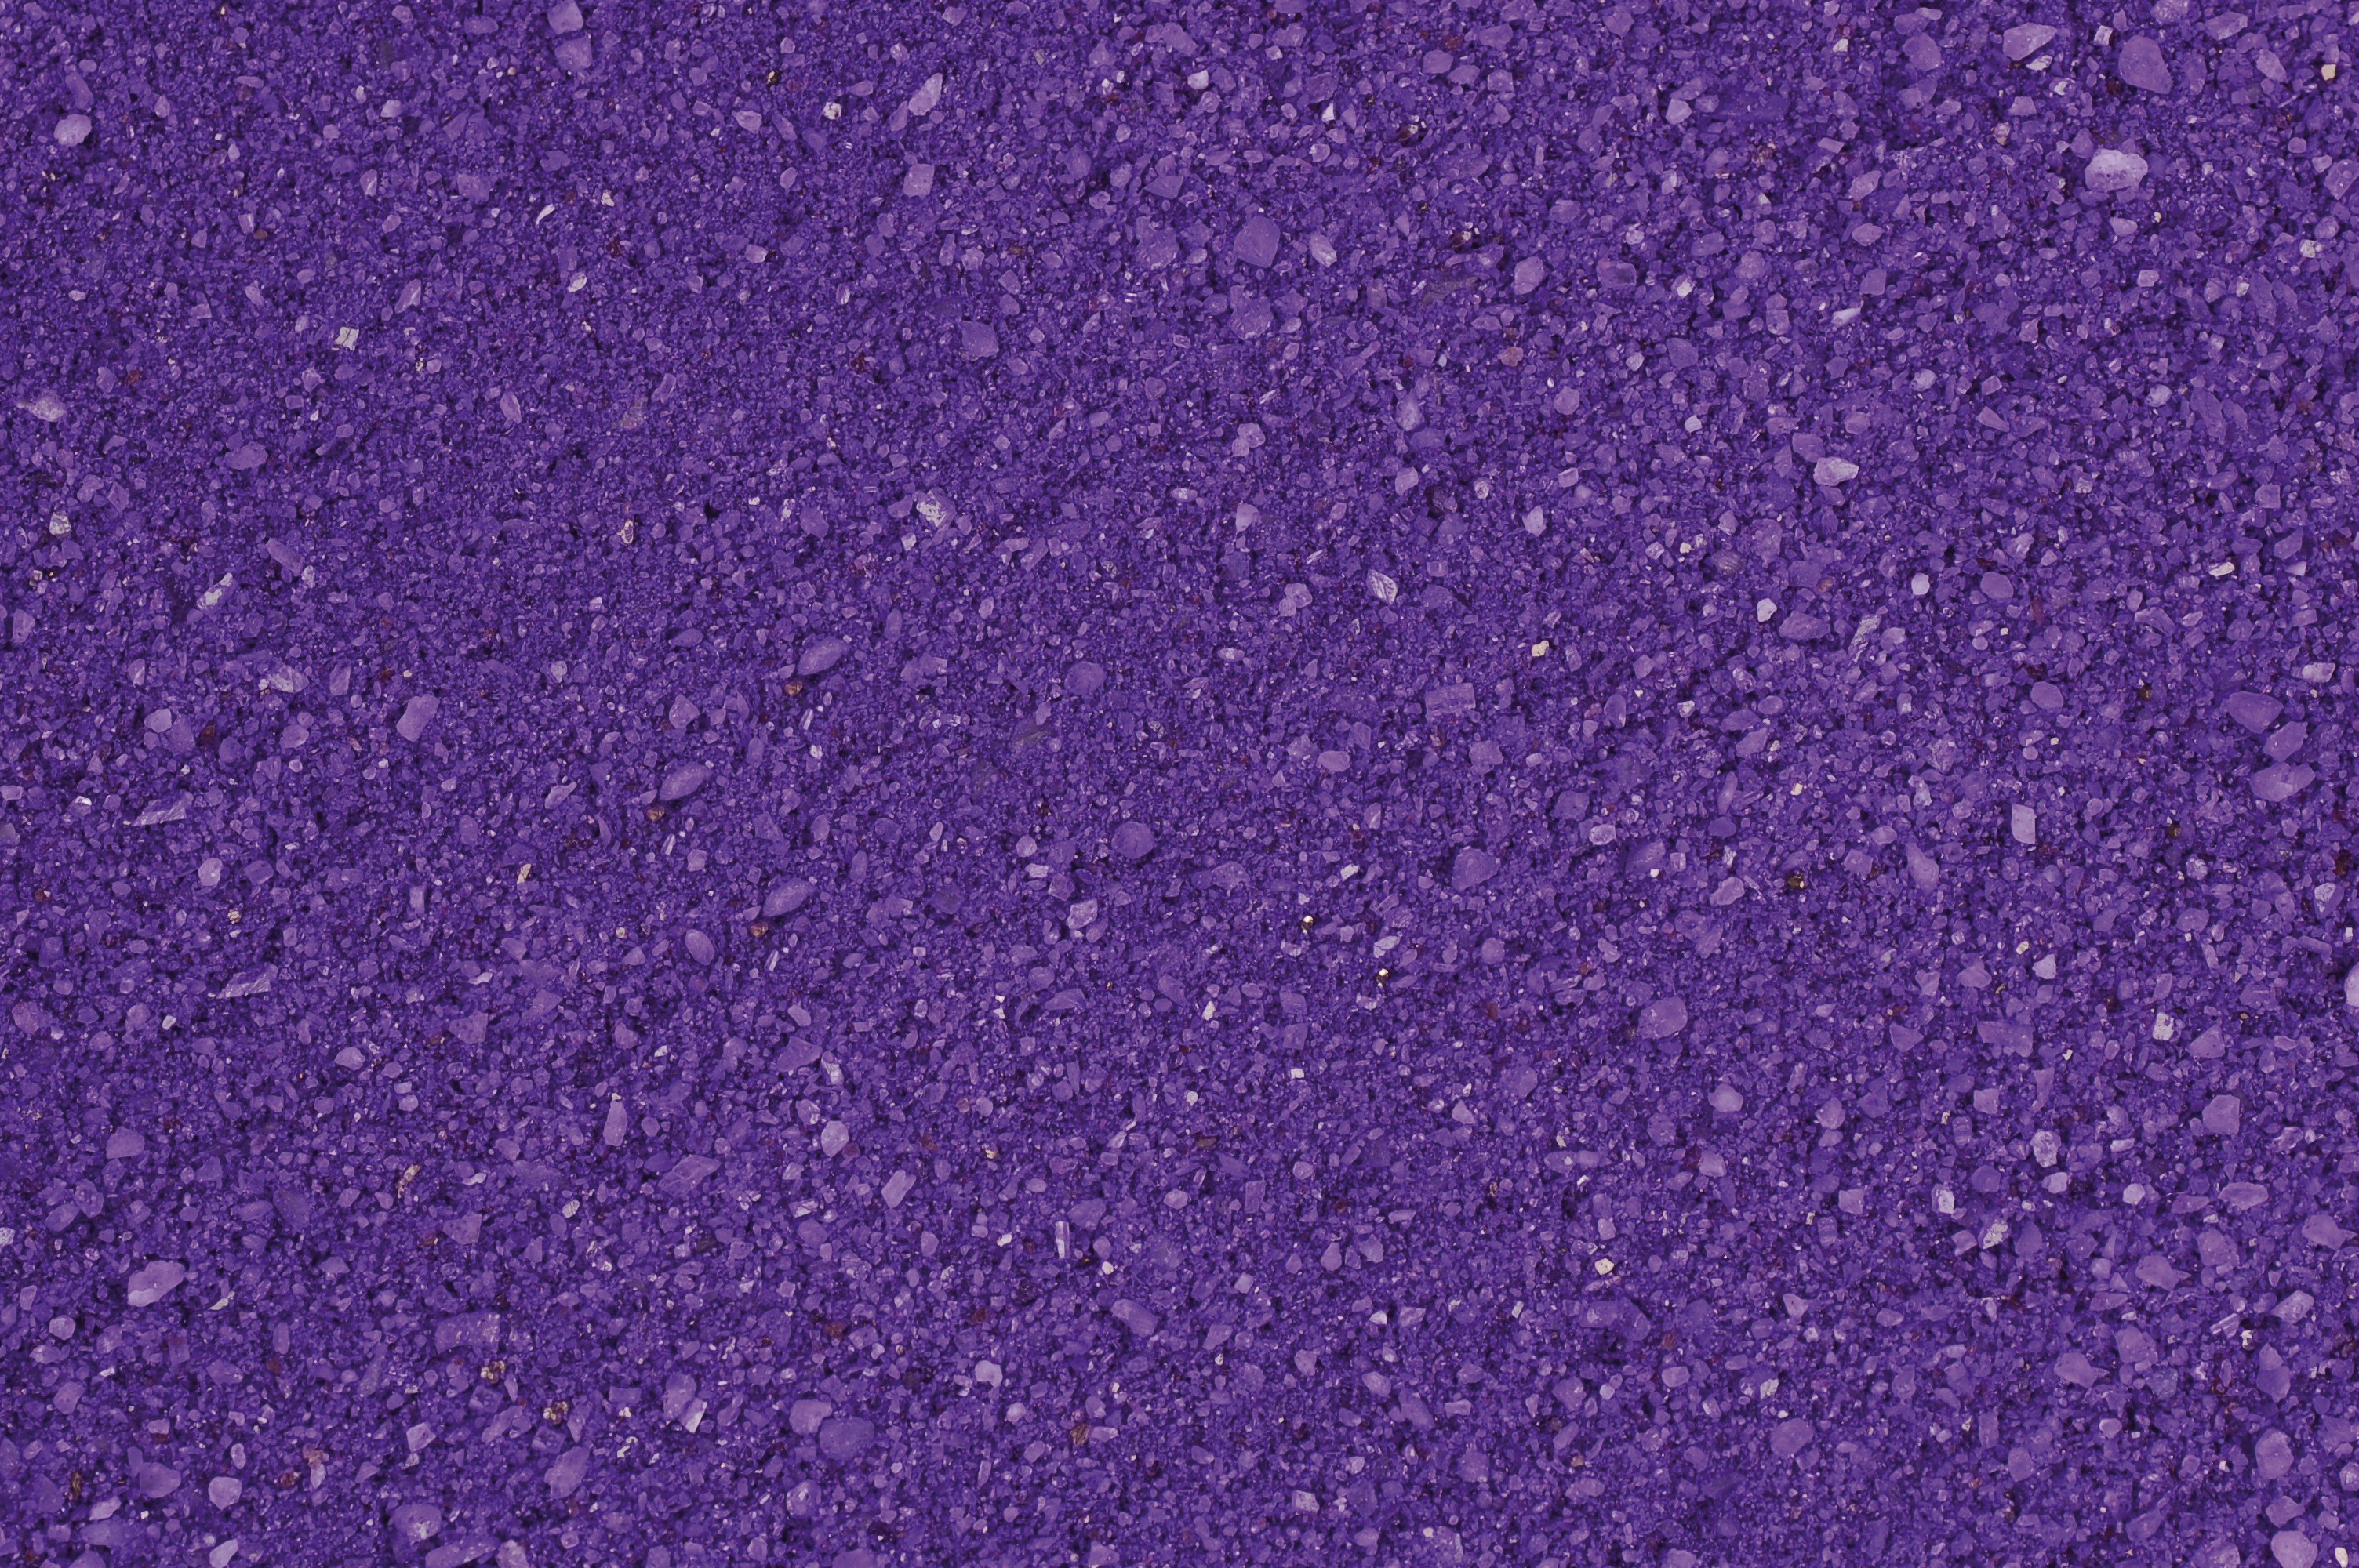 Komodo CaCO Sand Purple 4kg U46088